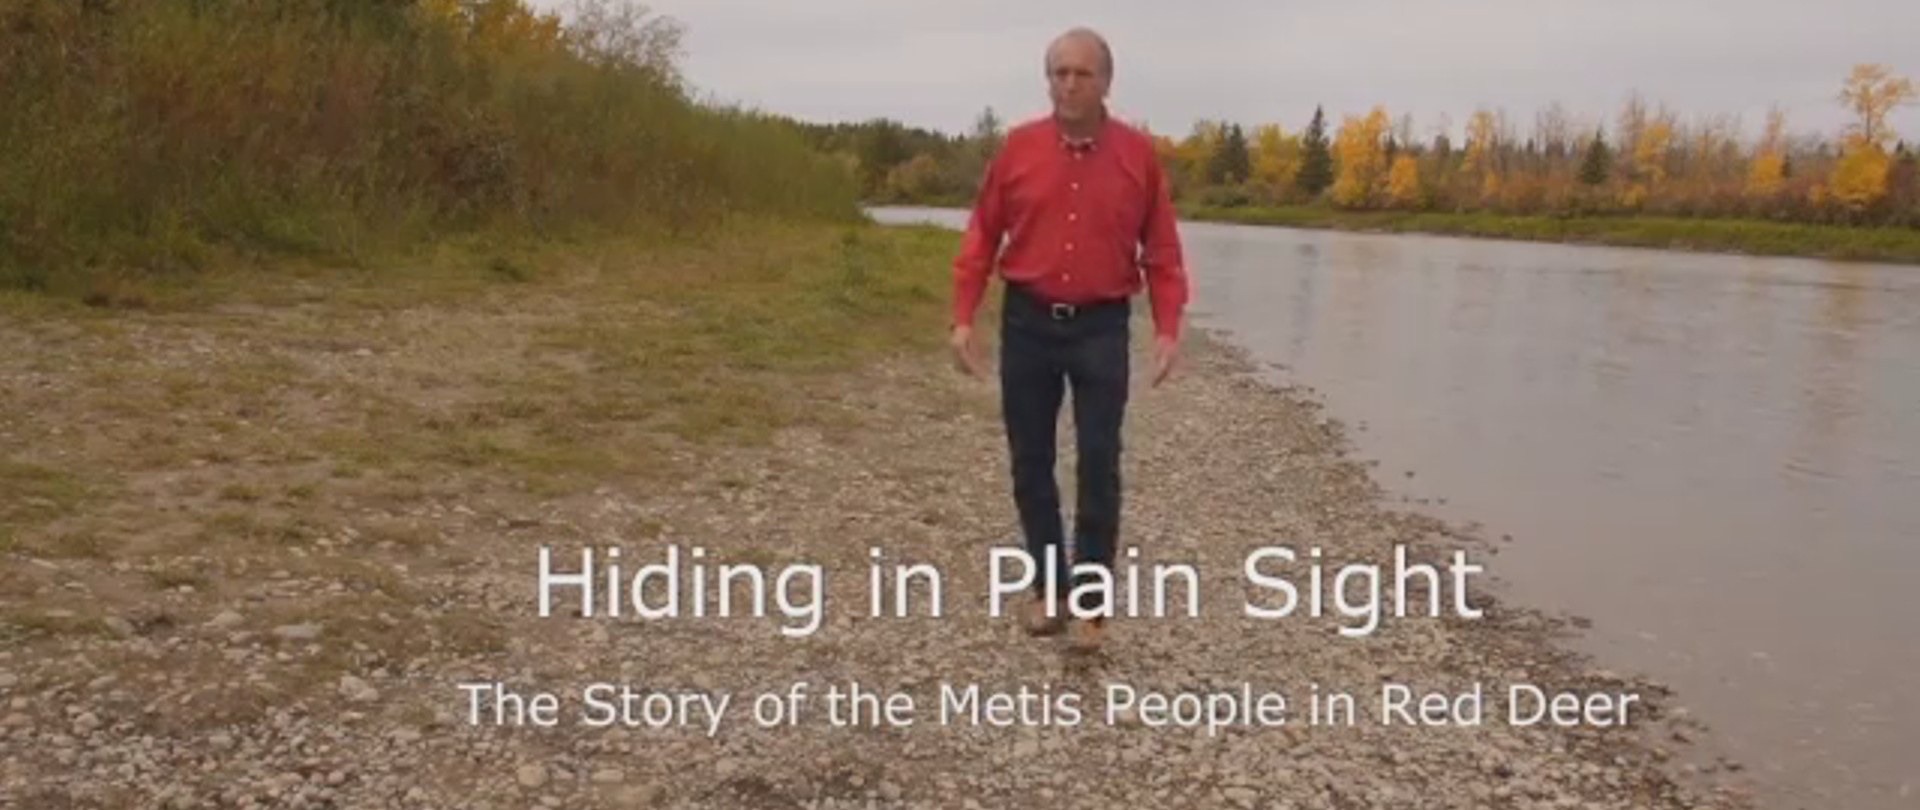 Hiding in Plain Sight-Story of the Metis People in Red Deer